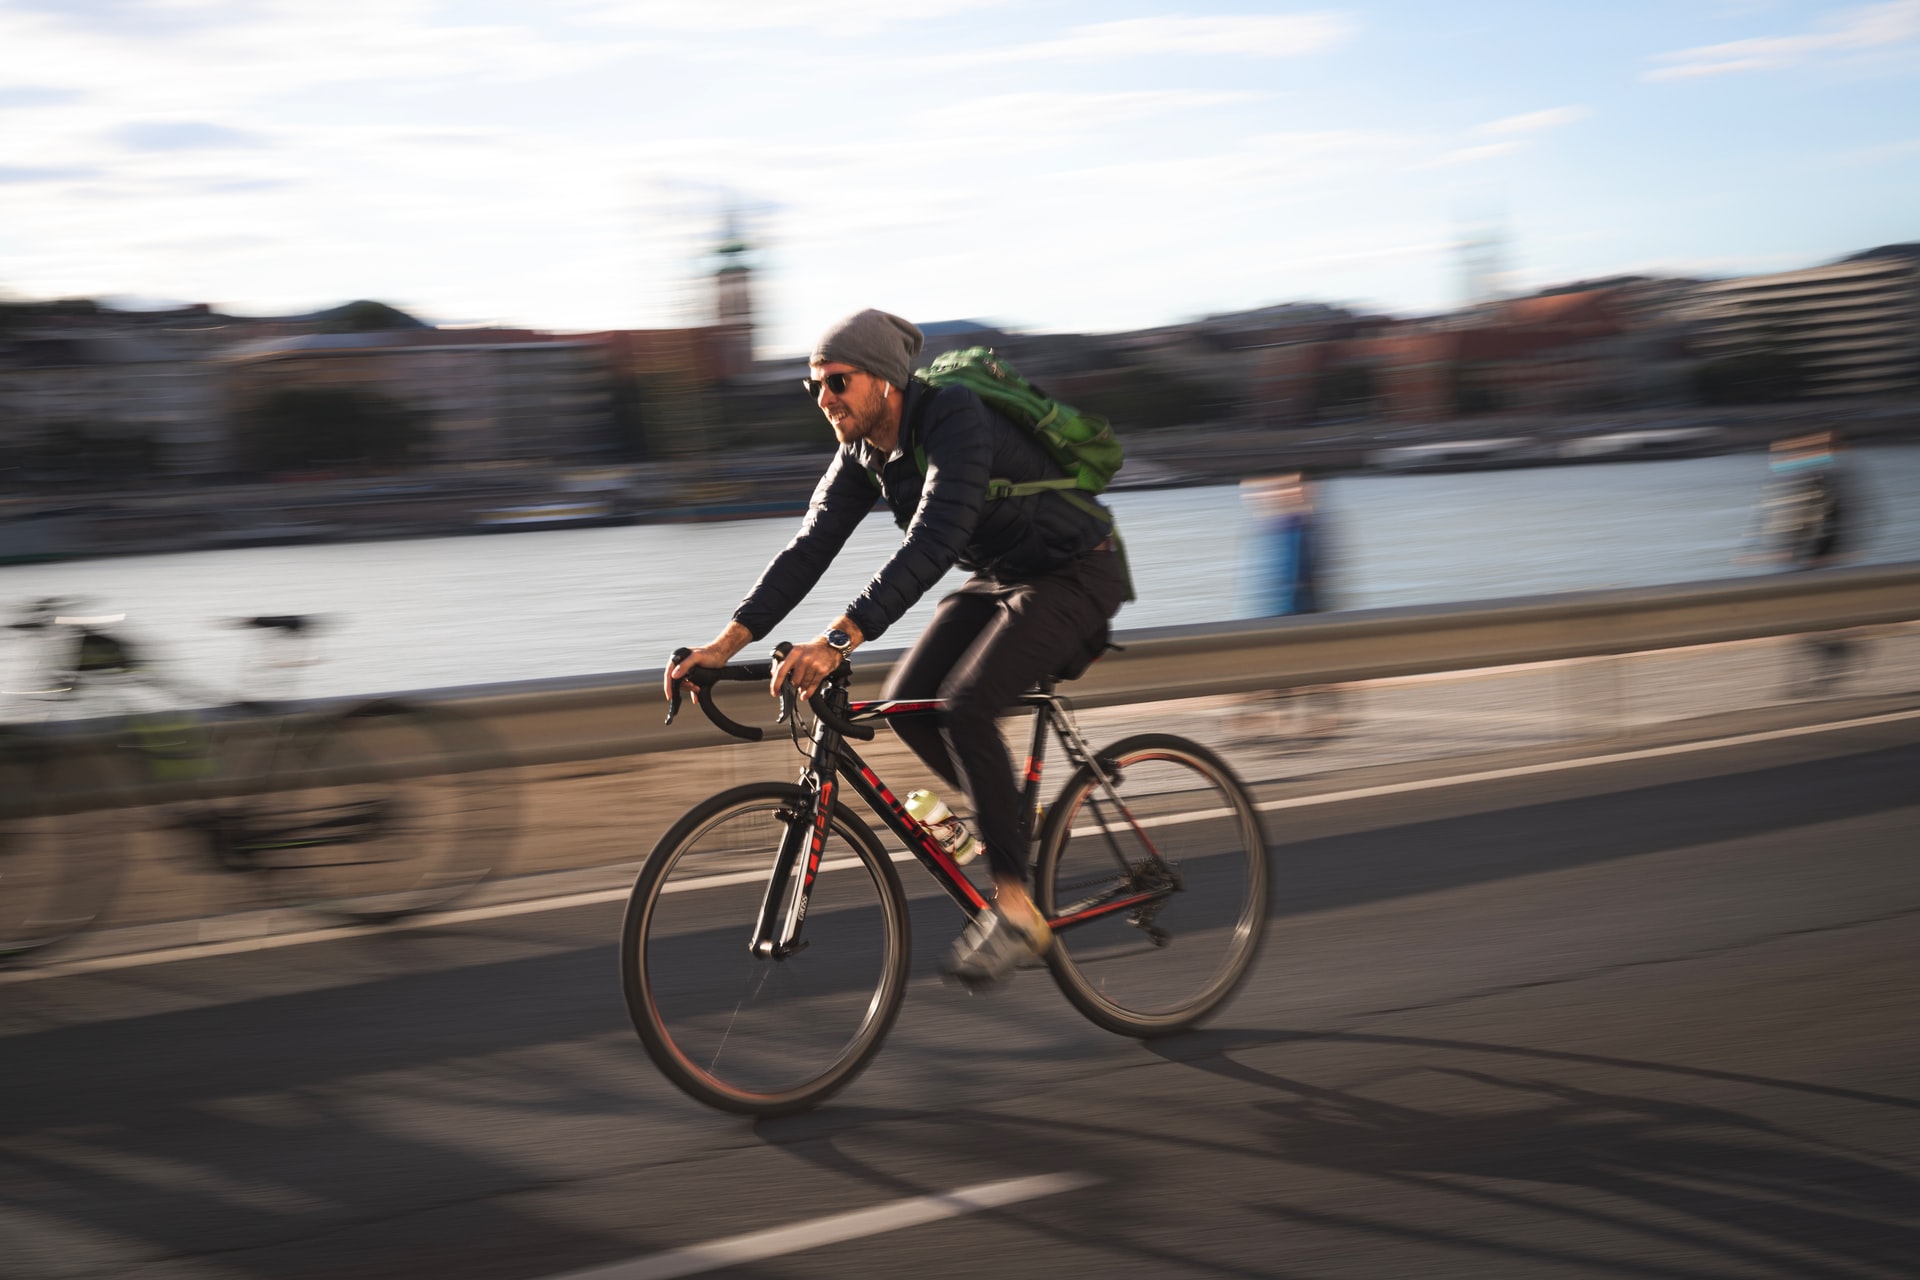 Seguro para bicicletas tem aumento de 479% em contratações / Foto: Tomi Vadász / Unsplash Images